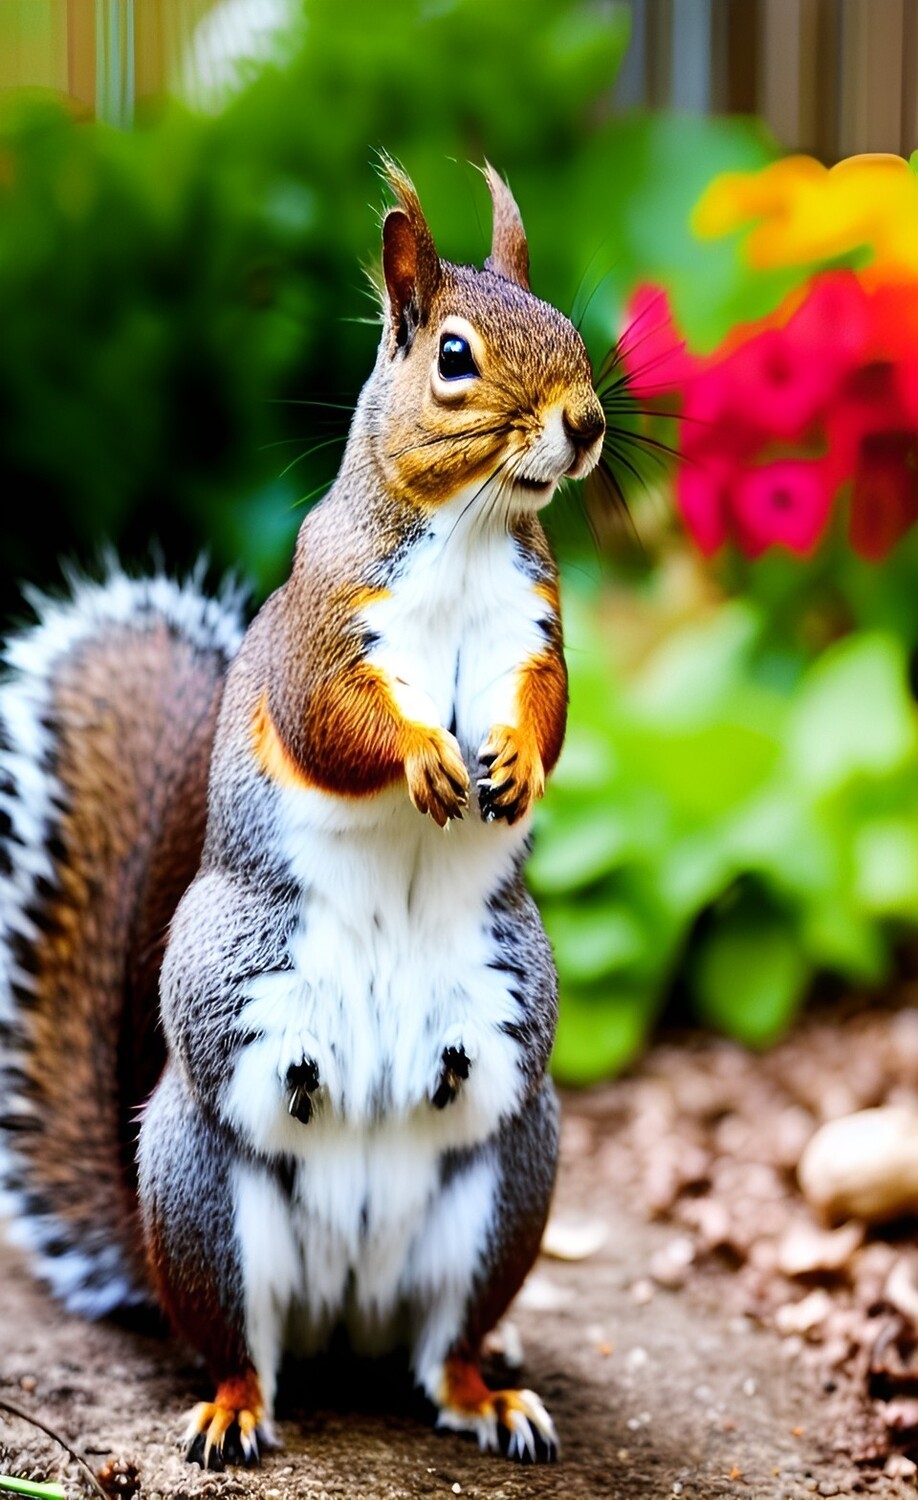 Deterring Squirrels from Your Garden